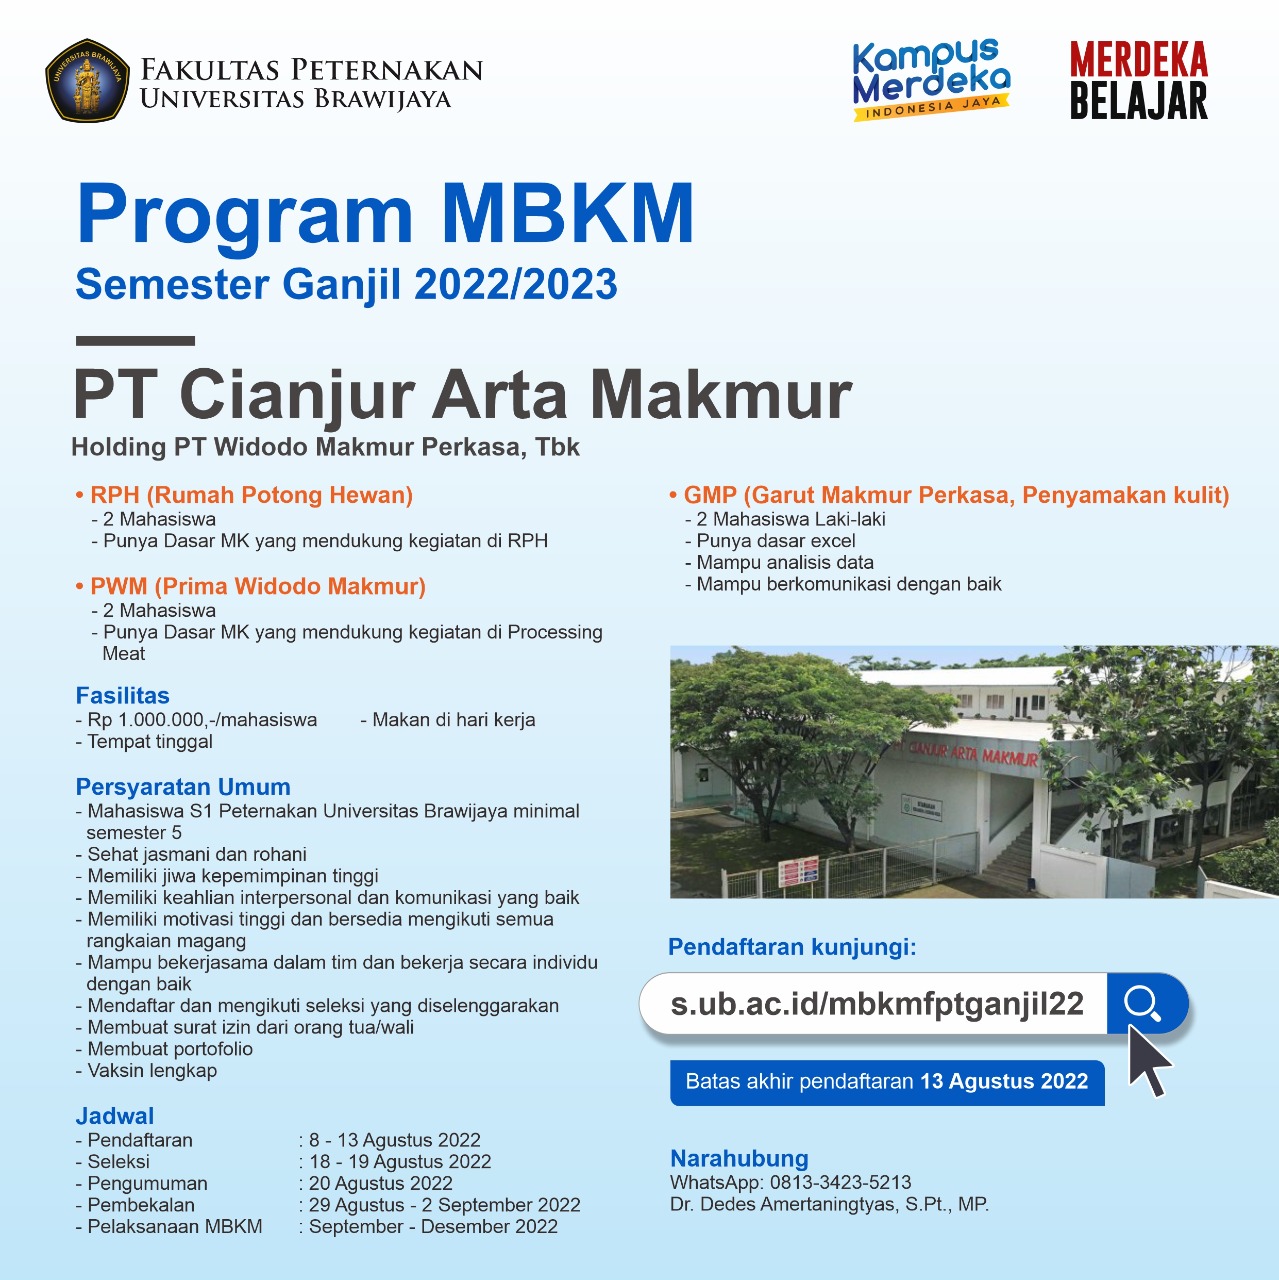 MBKM Program Odd Semester at PT. Cianjur Arta Makmur